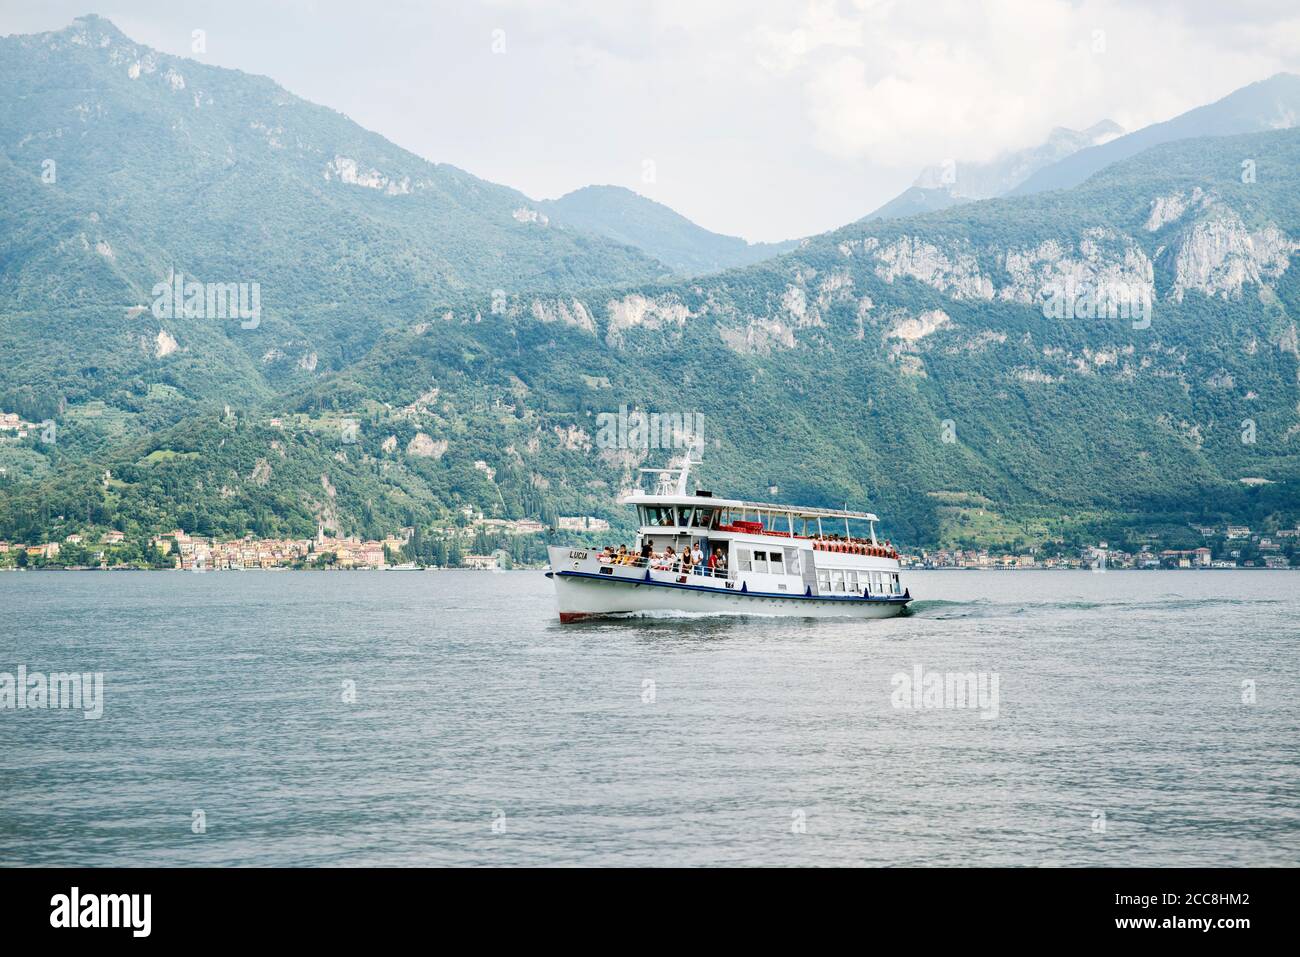 Lake Como. Italy - July 18, 2019: Ferry Boat in the Lake Como (Lago di Como) Italy, Europe. Stock Photo